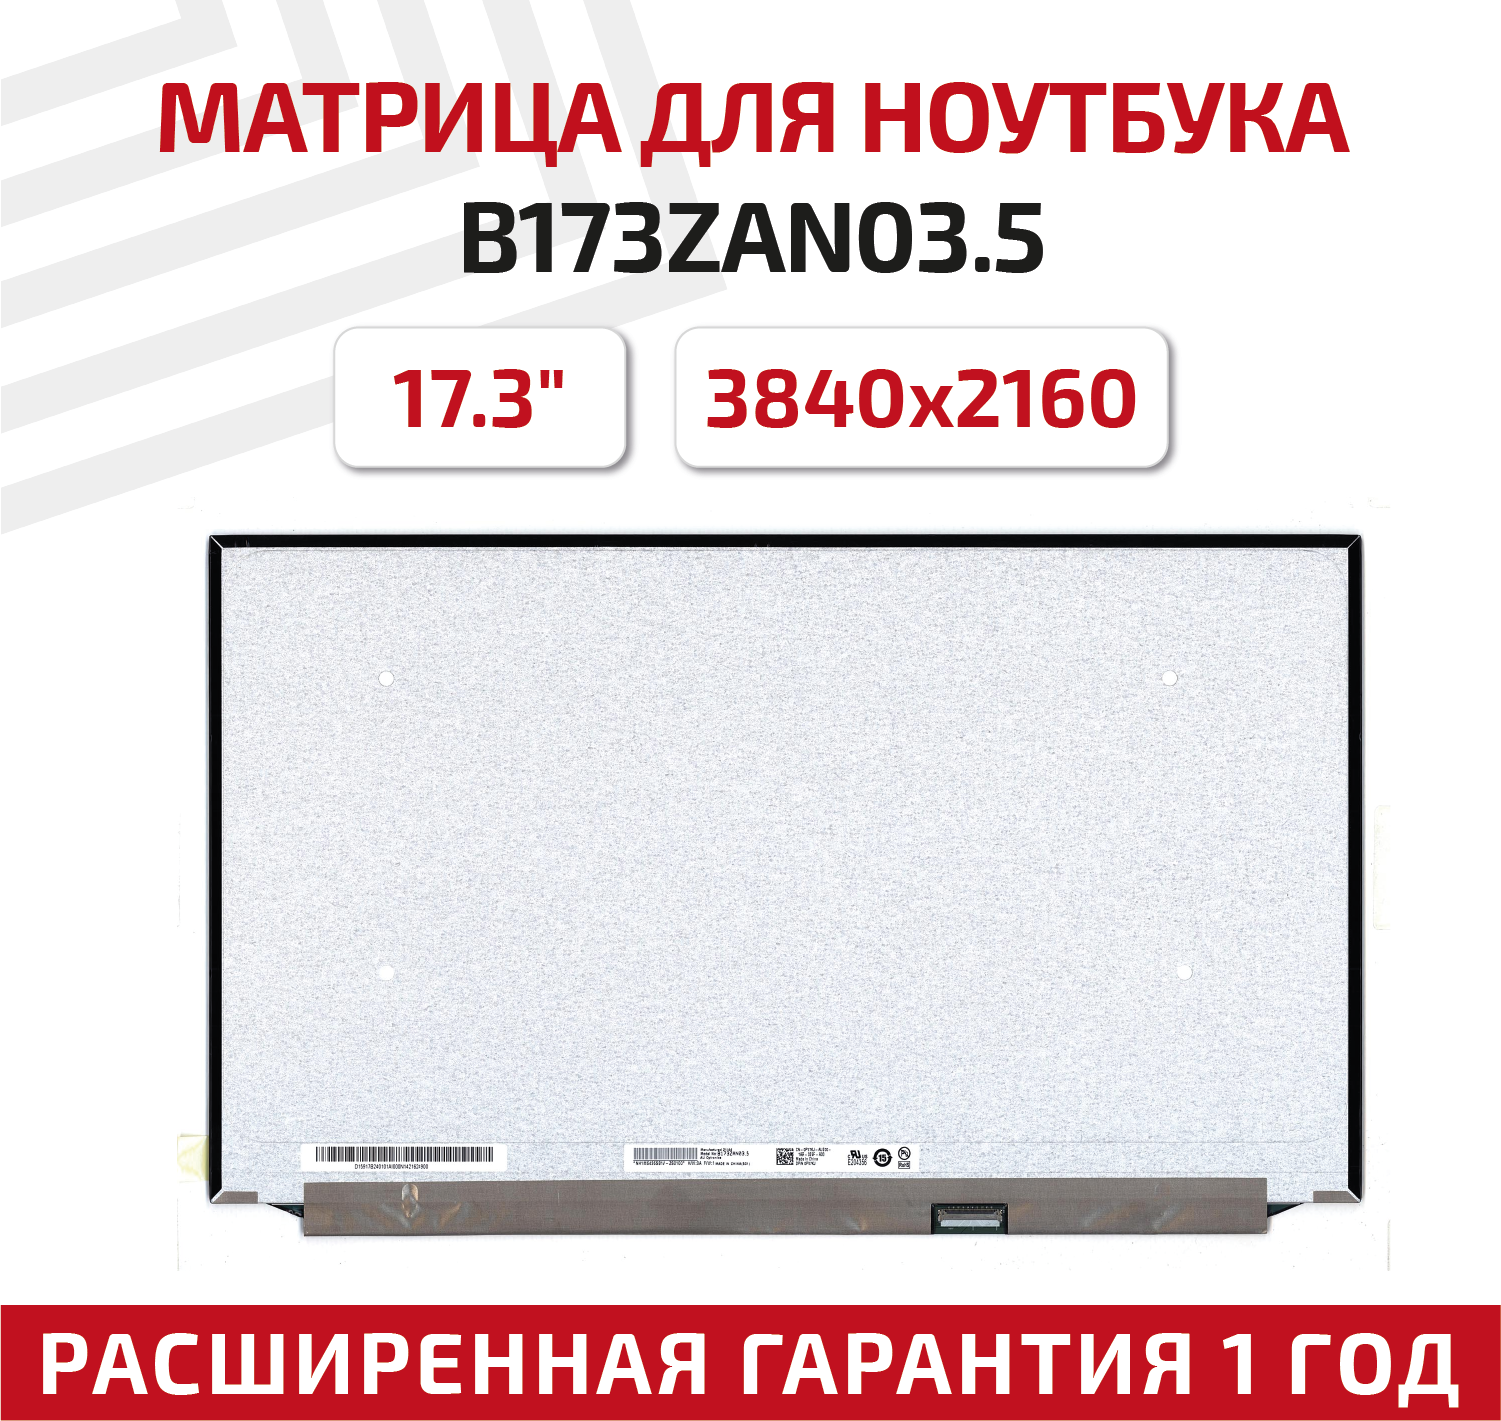 Матрица (экран) для ноутбука B173ZAN03.5, 3AUO2892, 17.3", 3840x2160, 40-pin, светодиодная (LED), матовая